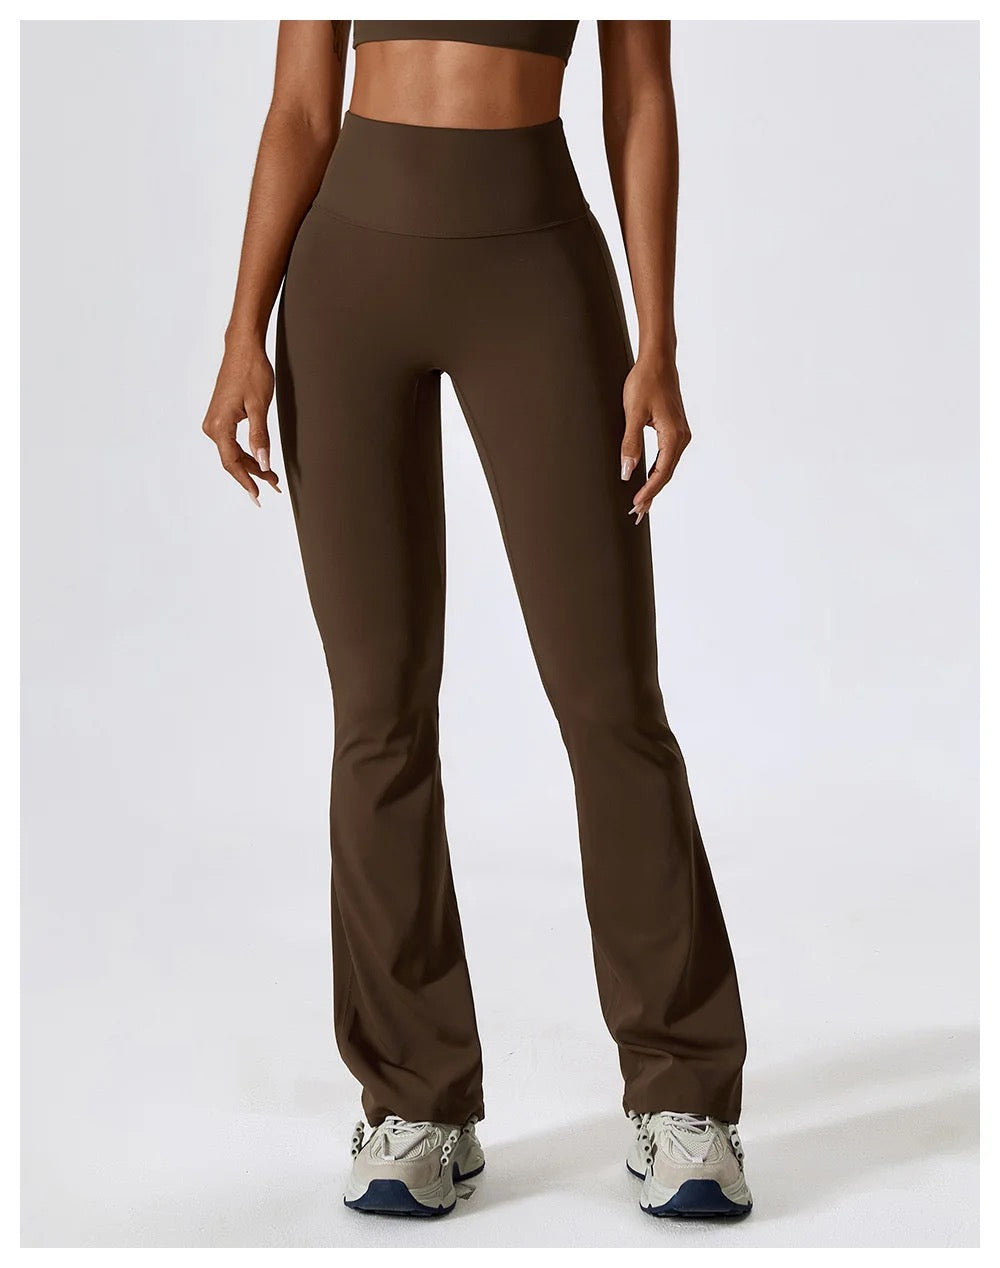 Chocolate Brown High Waist Fleece Lined Leggings  Clothes design, Boutique  pants, Leggings are not pants